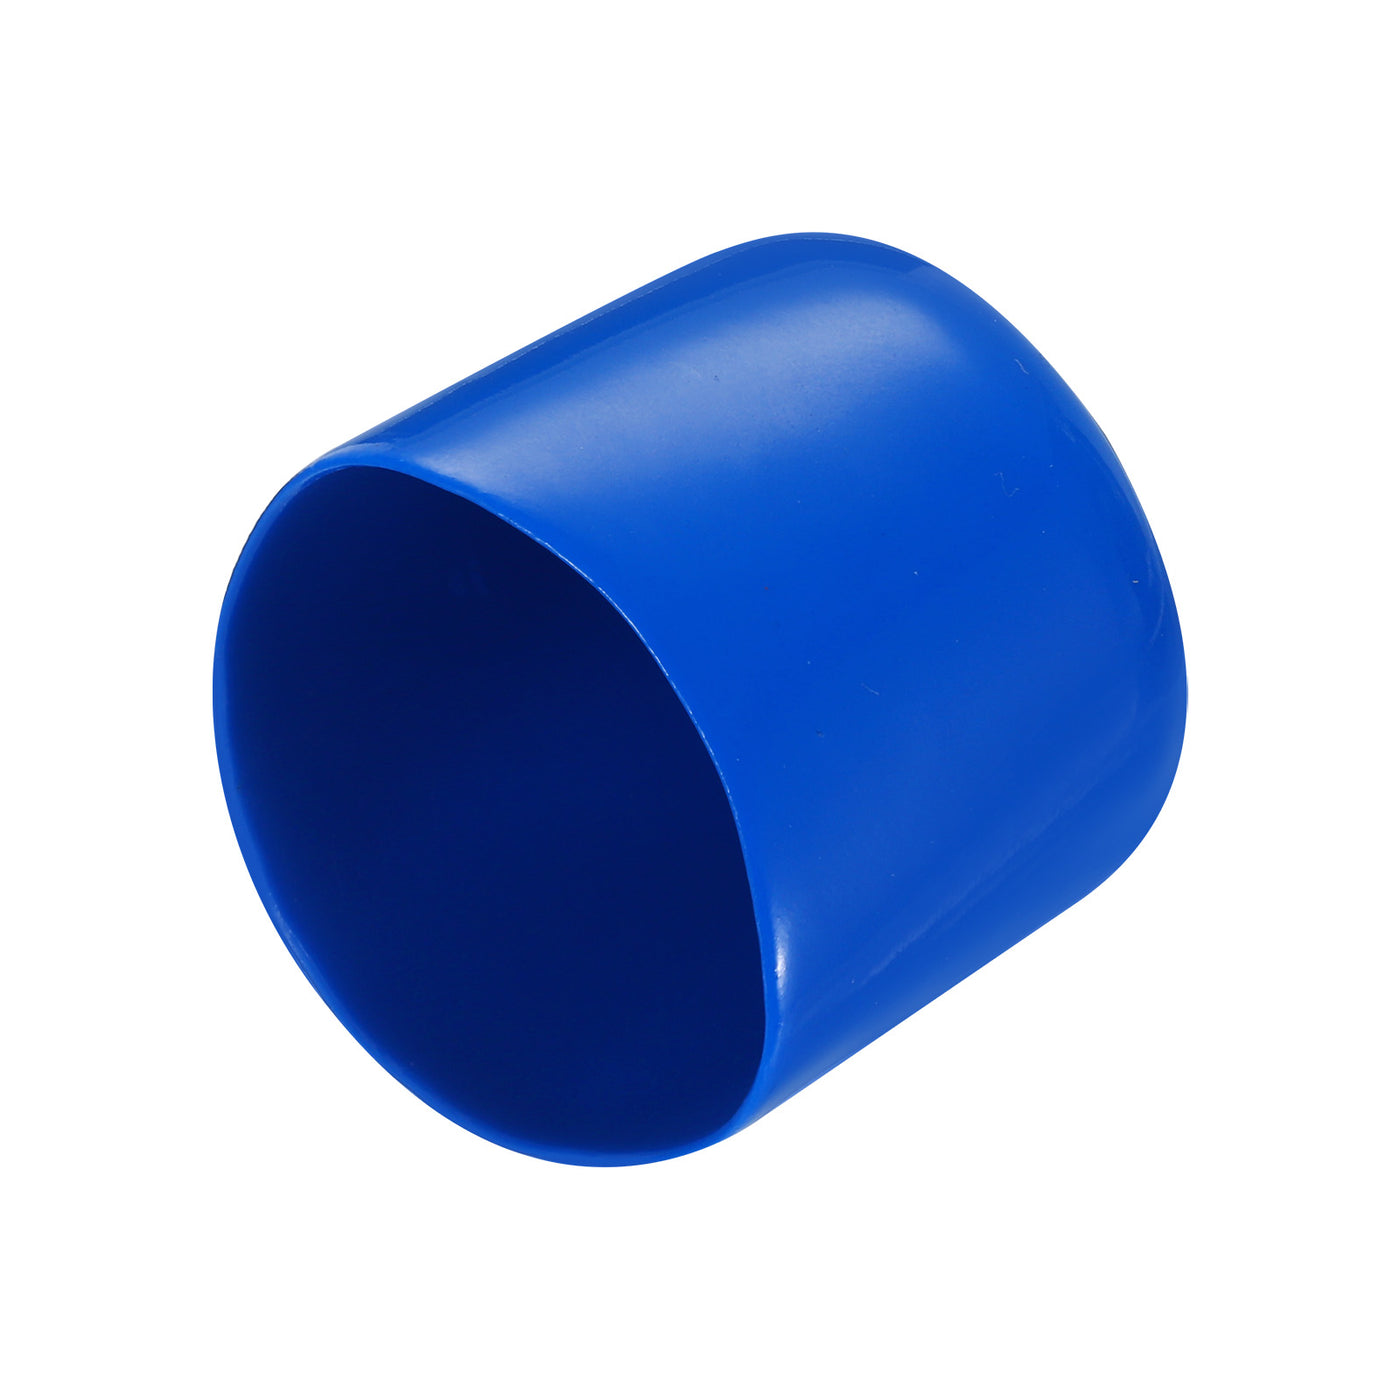 uxcell Uxcell 20pcs Rubber End Caps 38mm ID Vinyl PVC Round Tube Bolt Cap Cover Screw Thread Protectors Blue